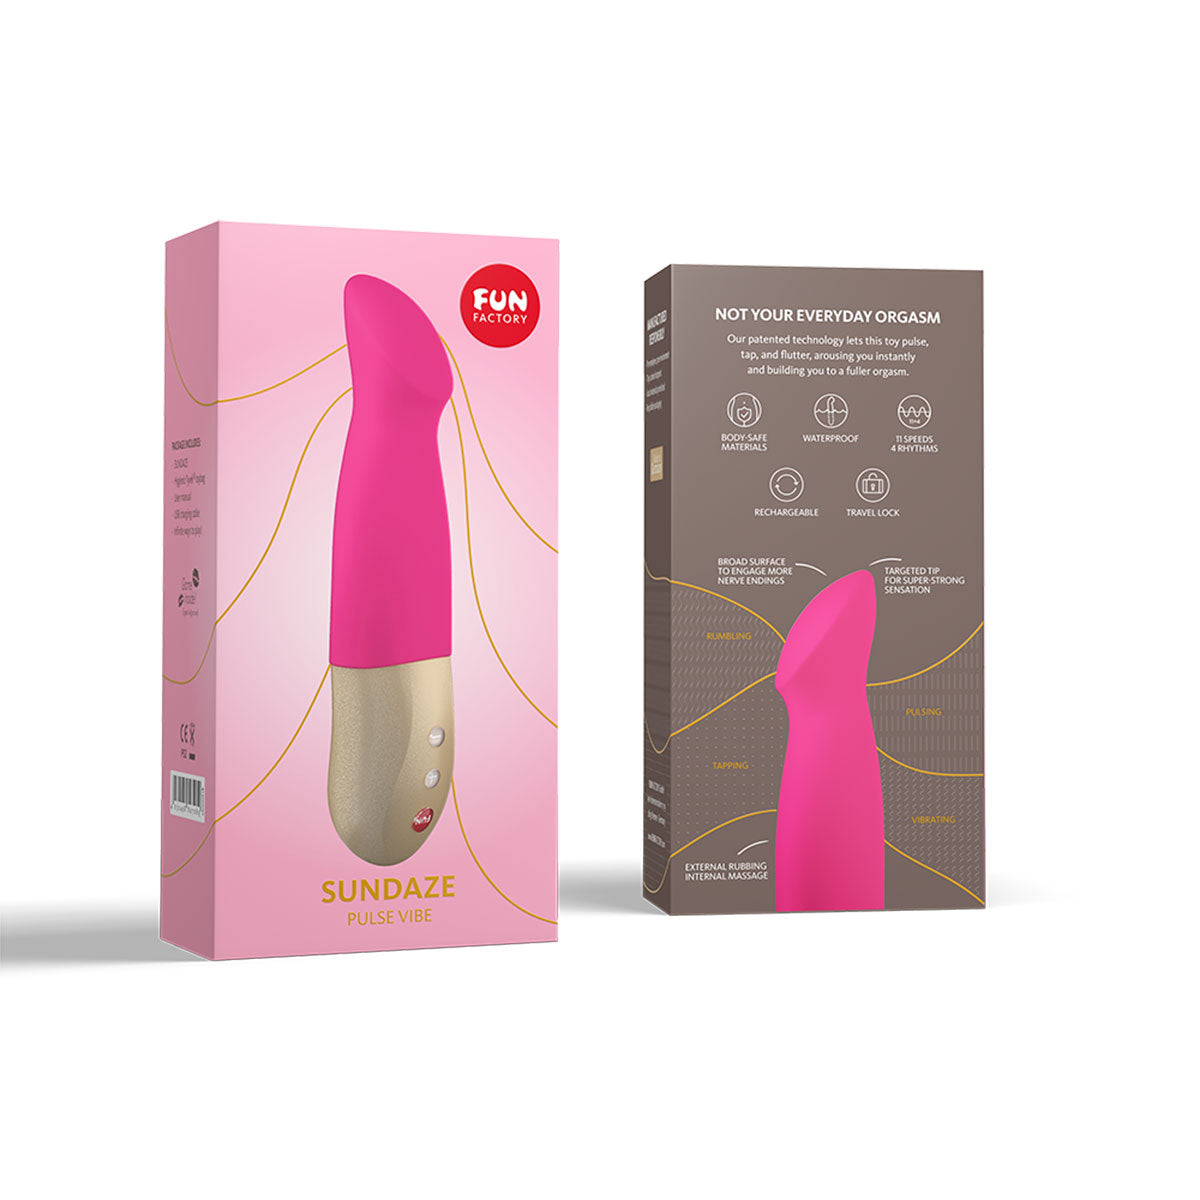 Fun Factory Sundaze - Fuchsia Pink Intimates Adult Boutique